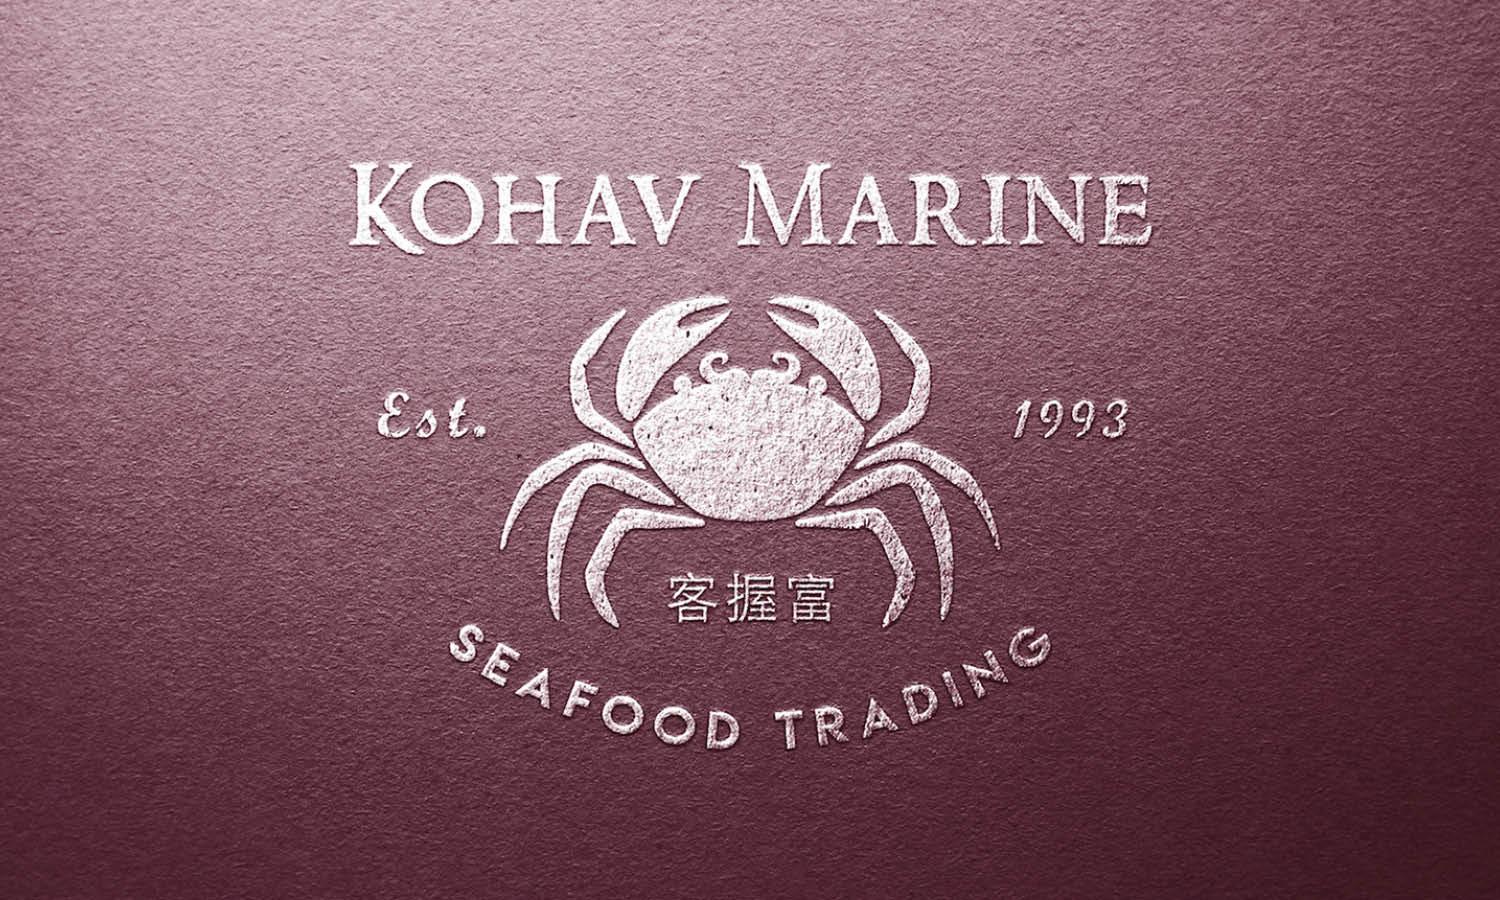 seafood logo